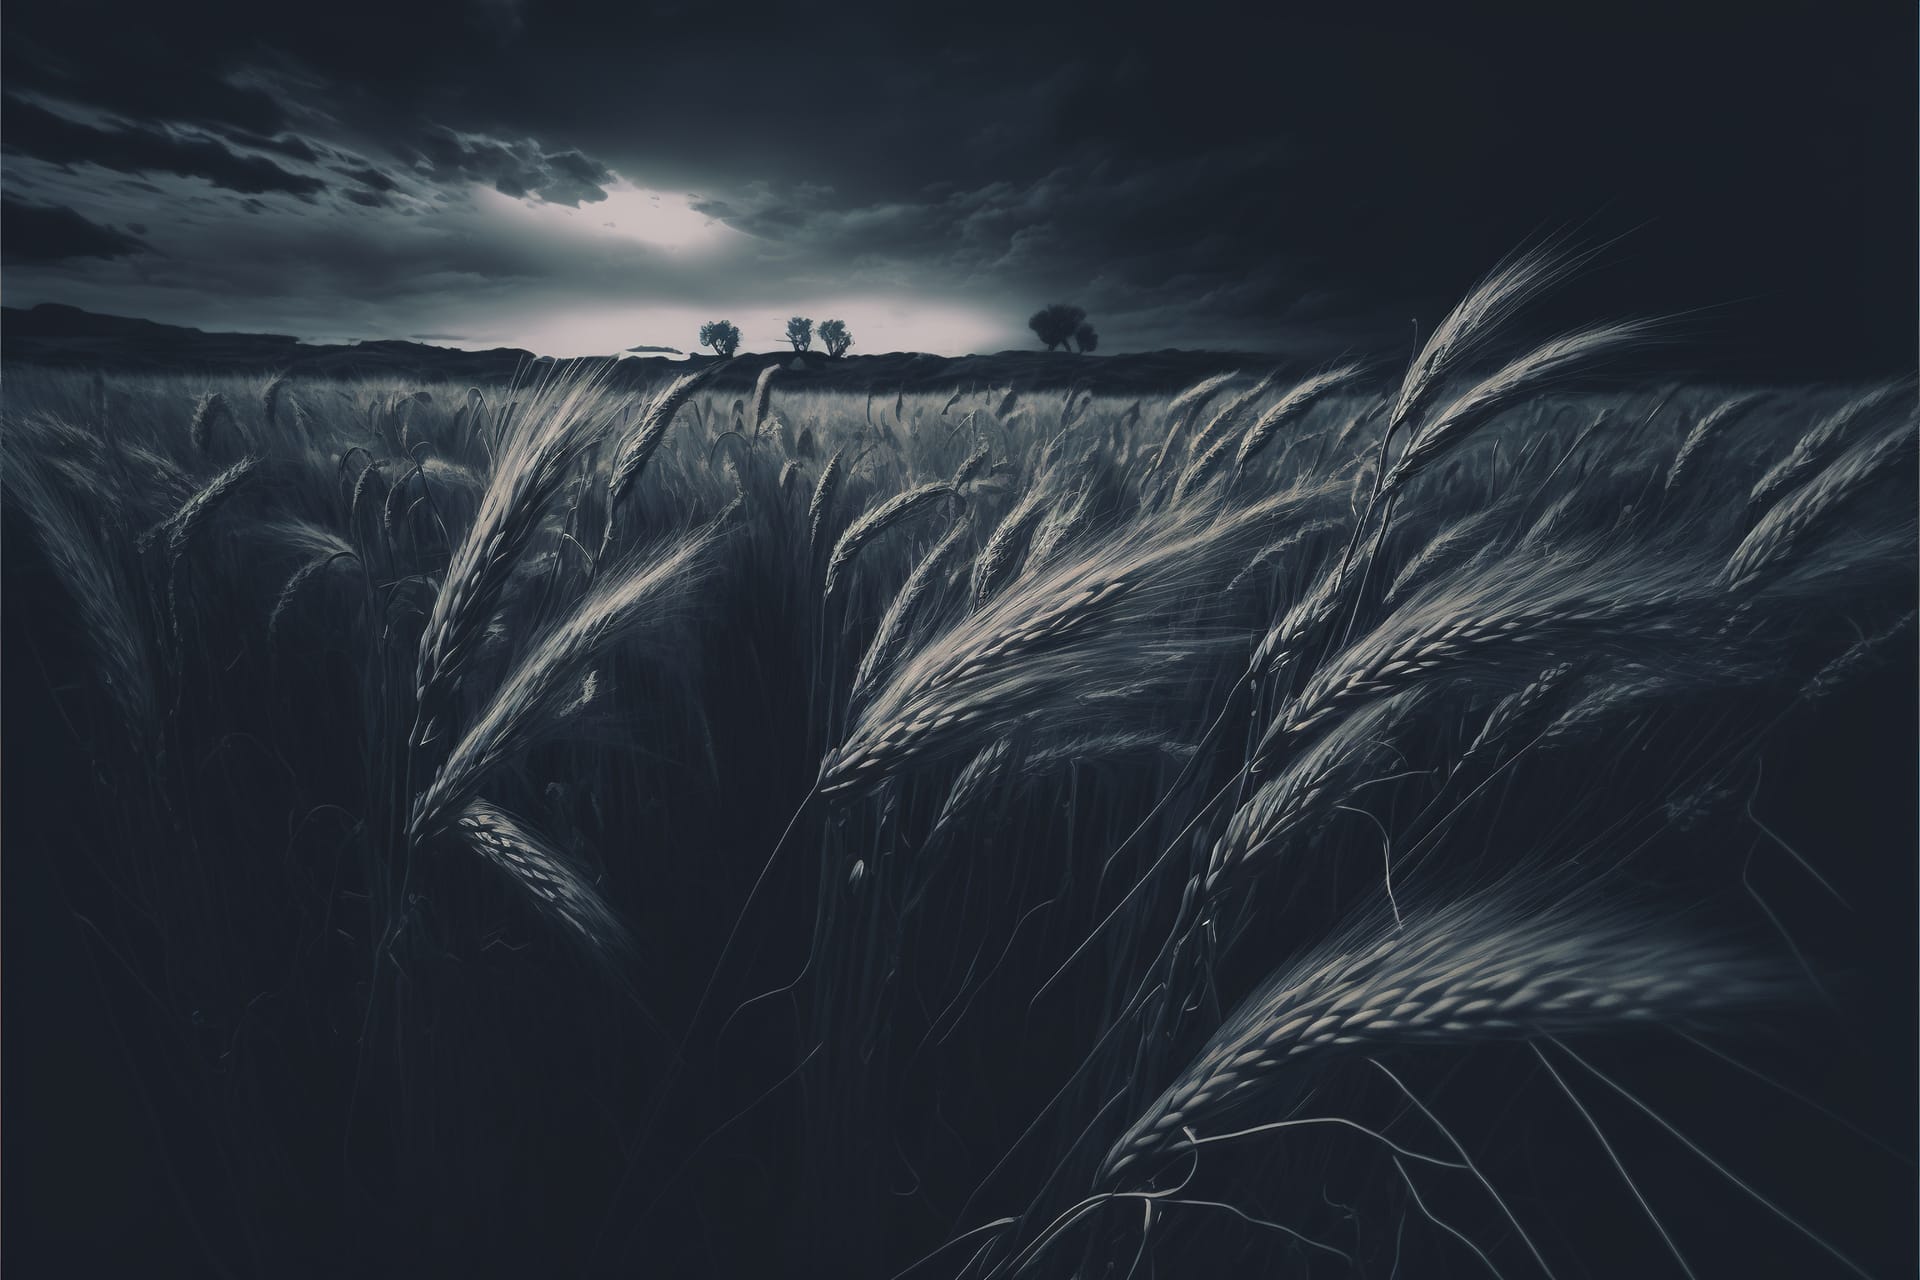 Windy barley field night image